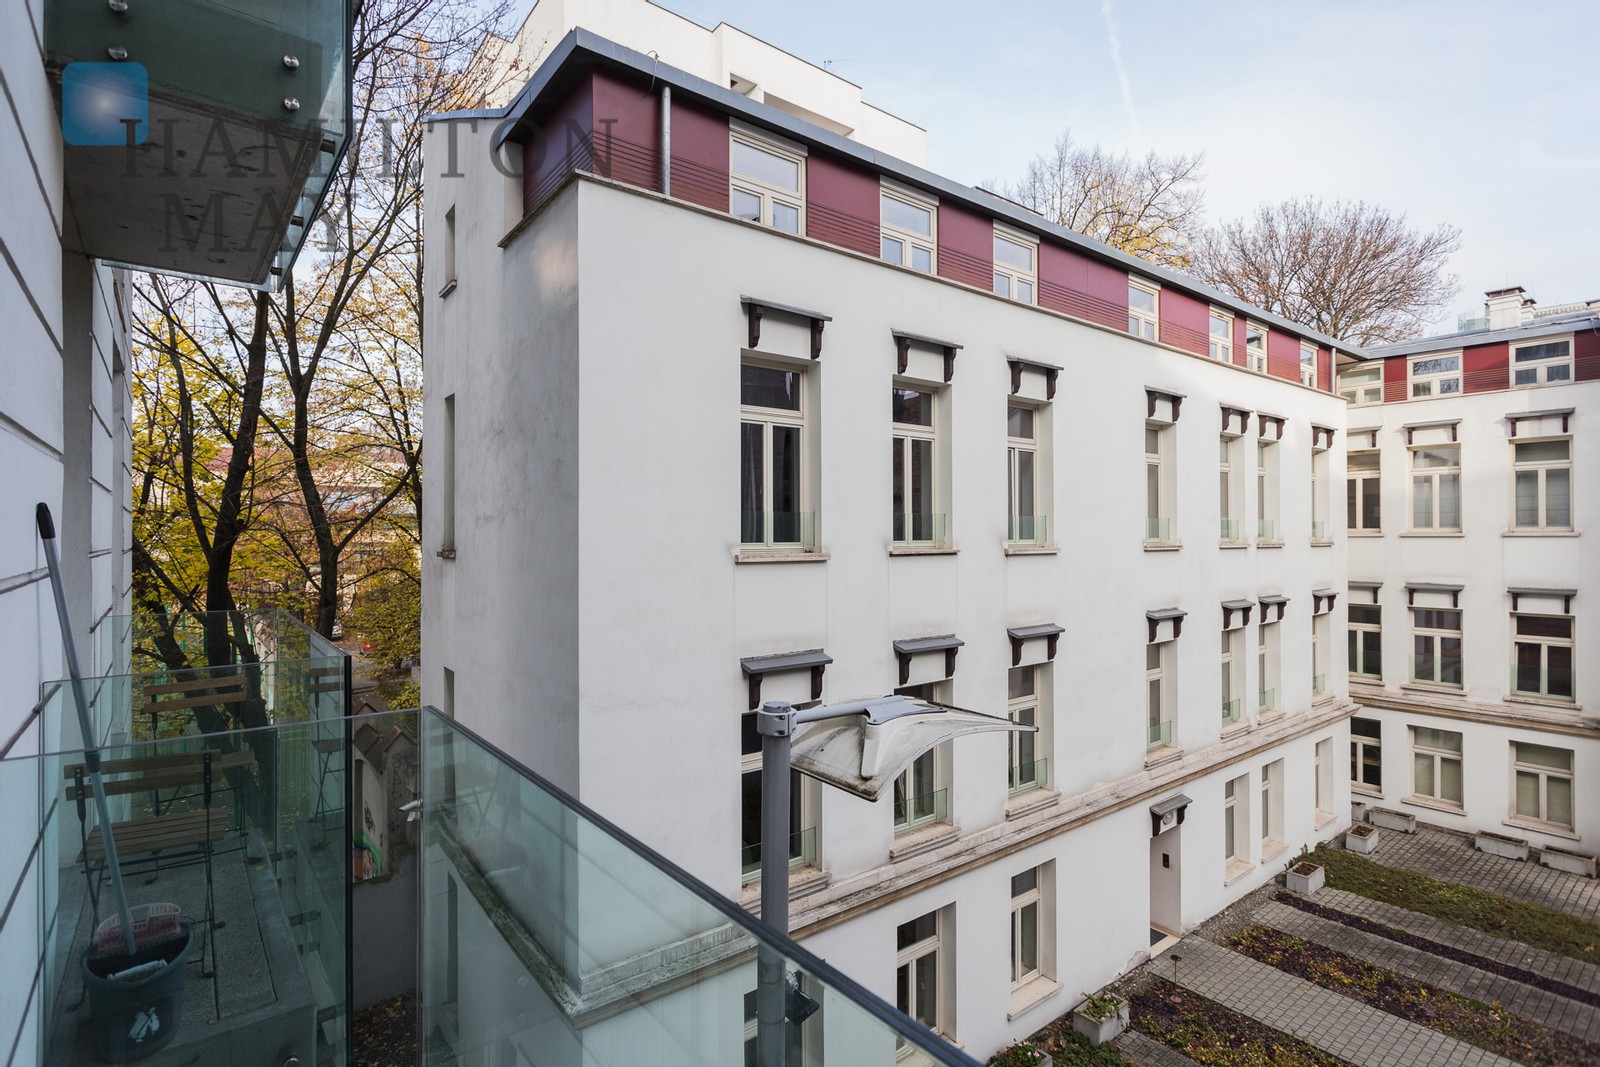 Modern, one-bedroom apartment in the prestigious investment - Sobieski Residence in the Old Town Krakow for rent